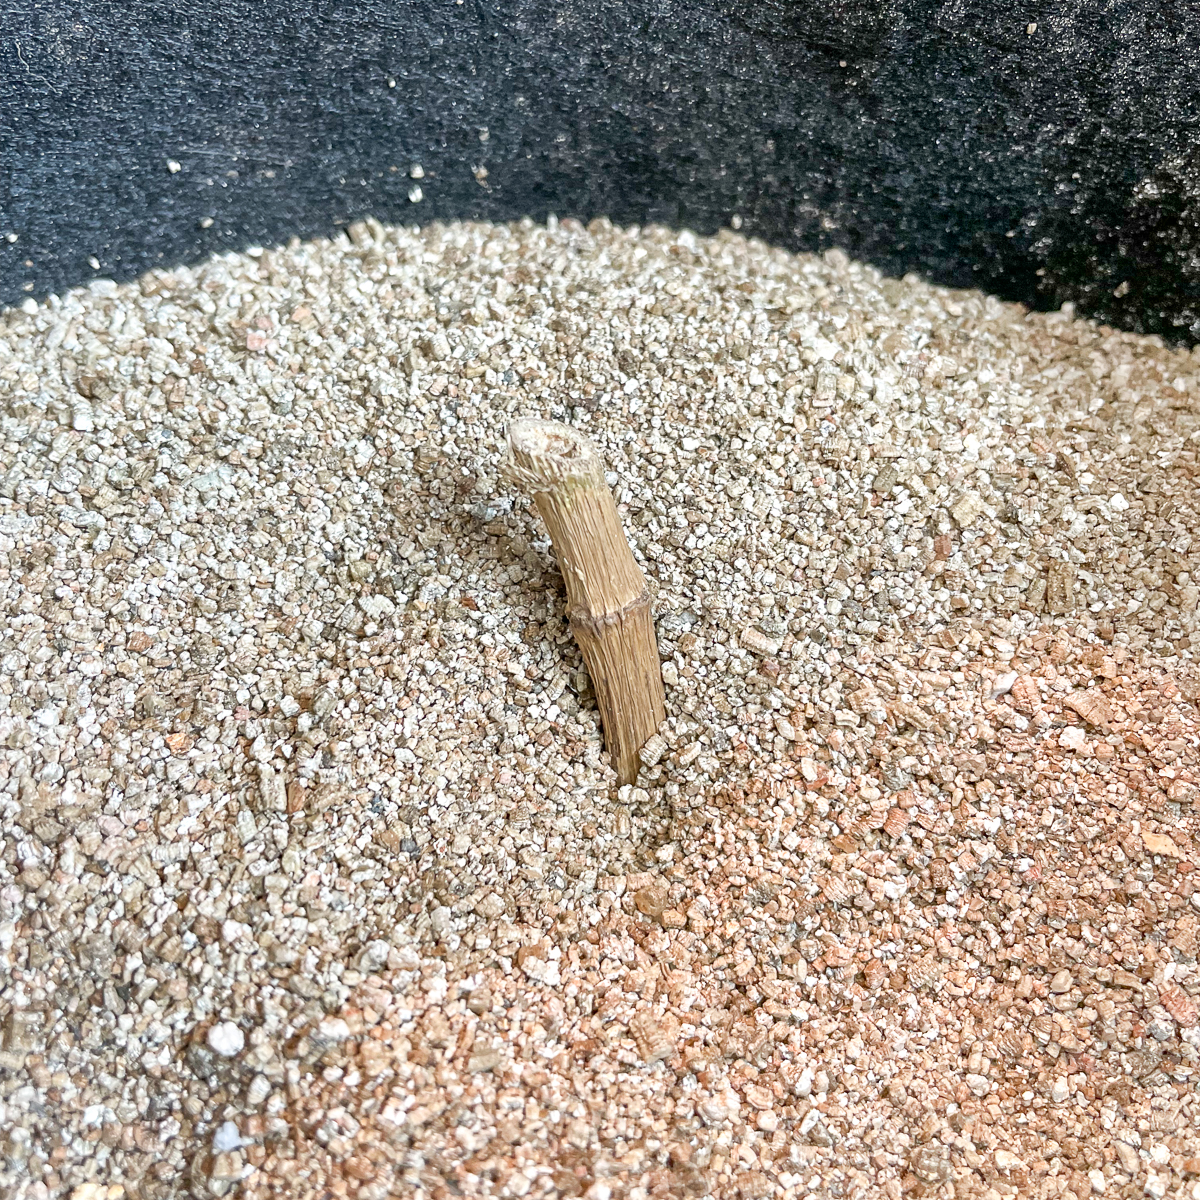 dahlia tubers stored in vermiculite